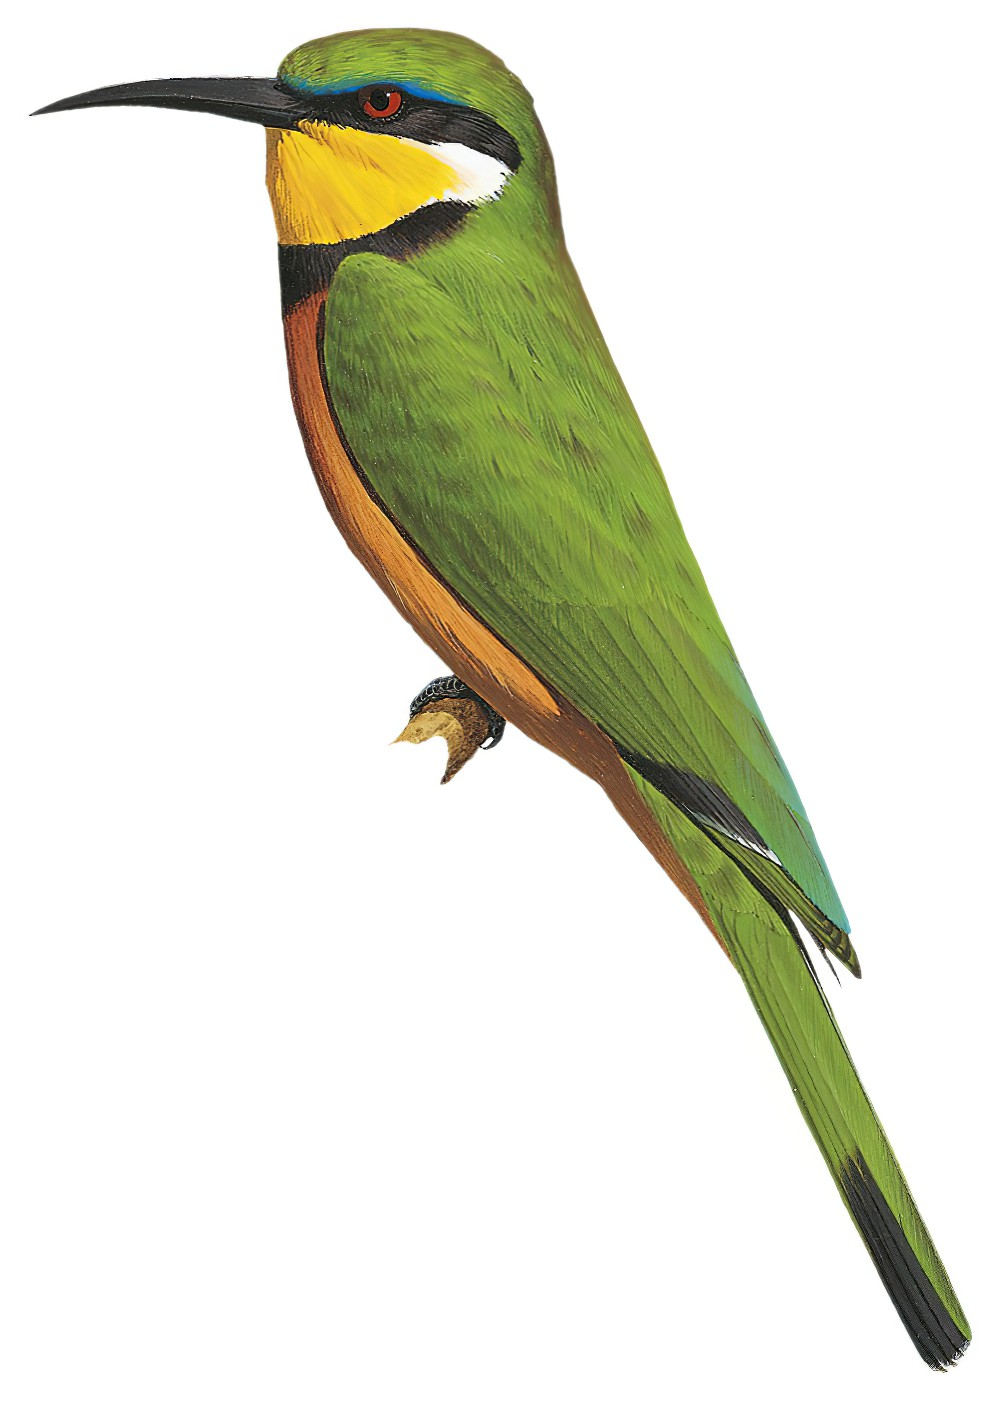 Cinnamon-chested Bee-eater / Merops oreobates